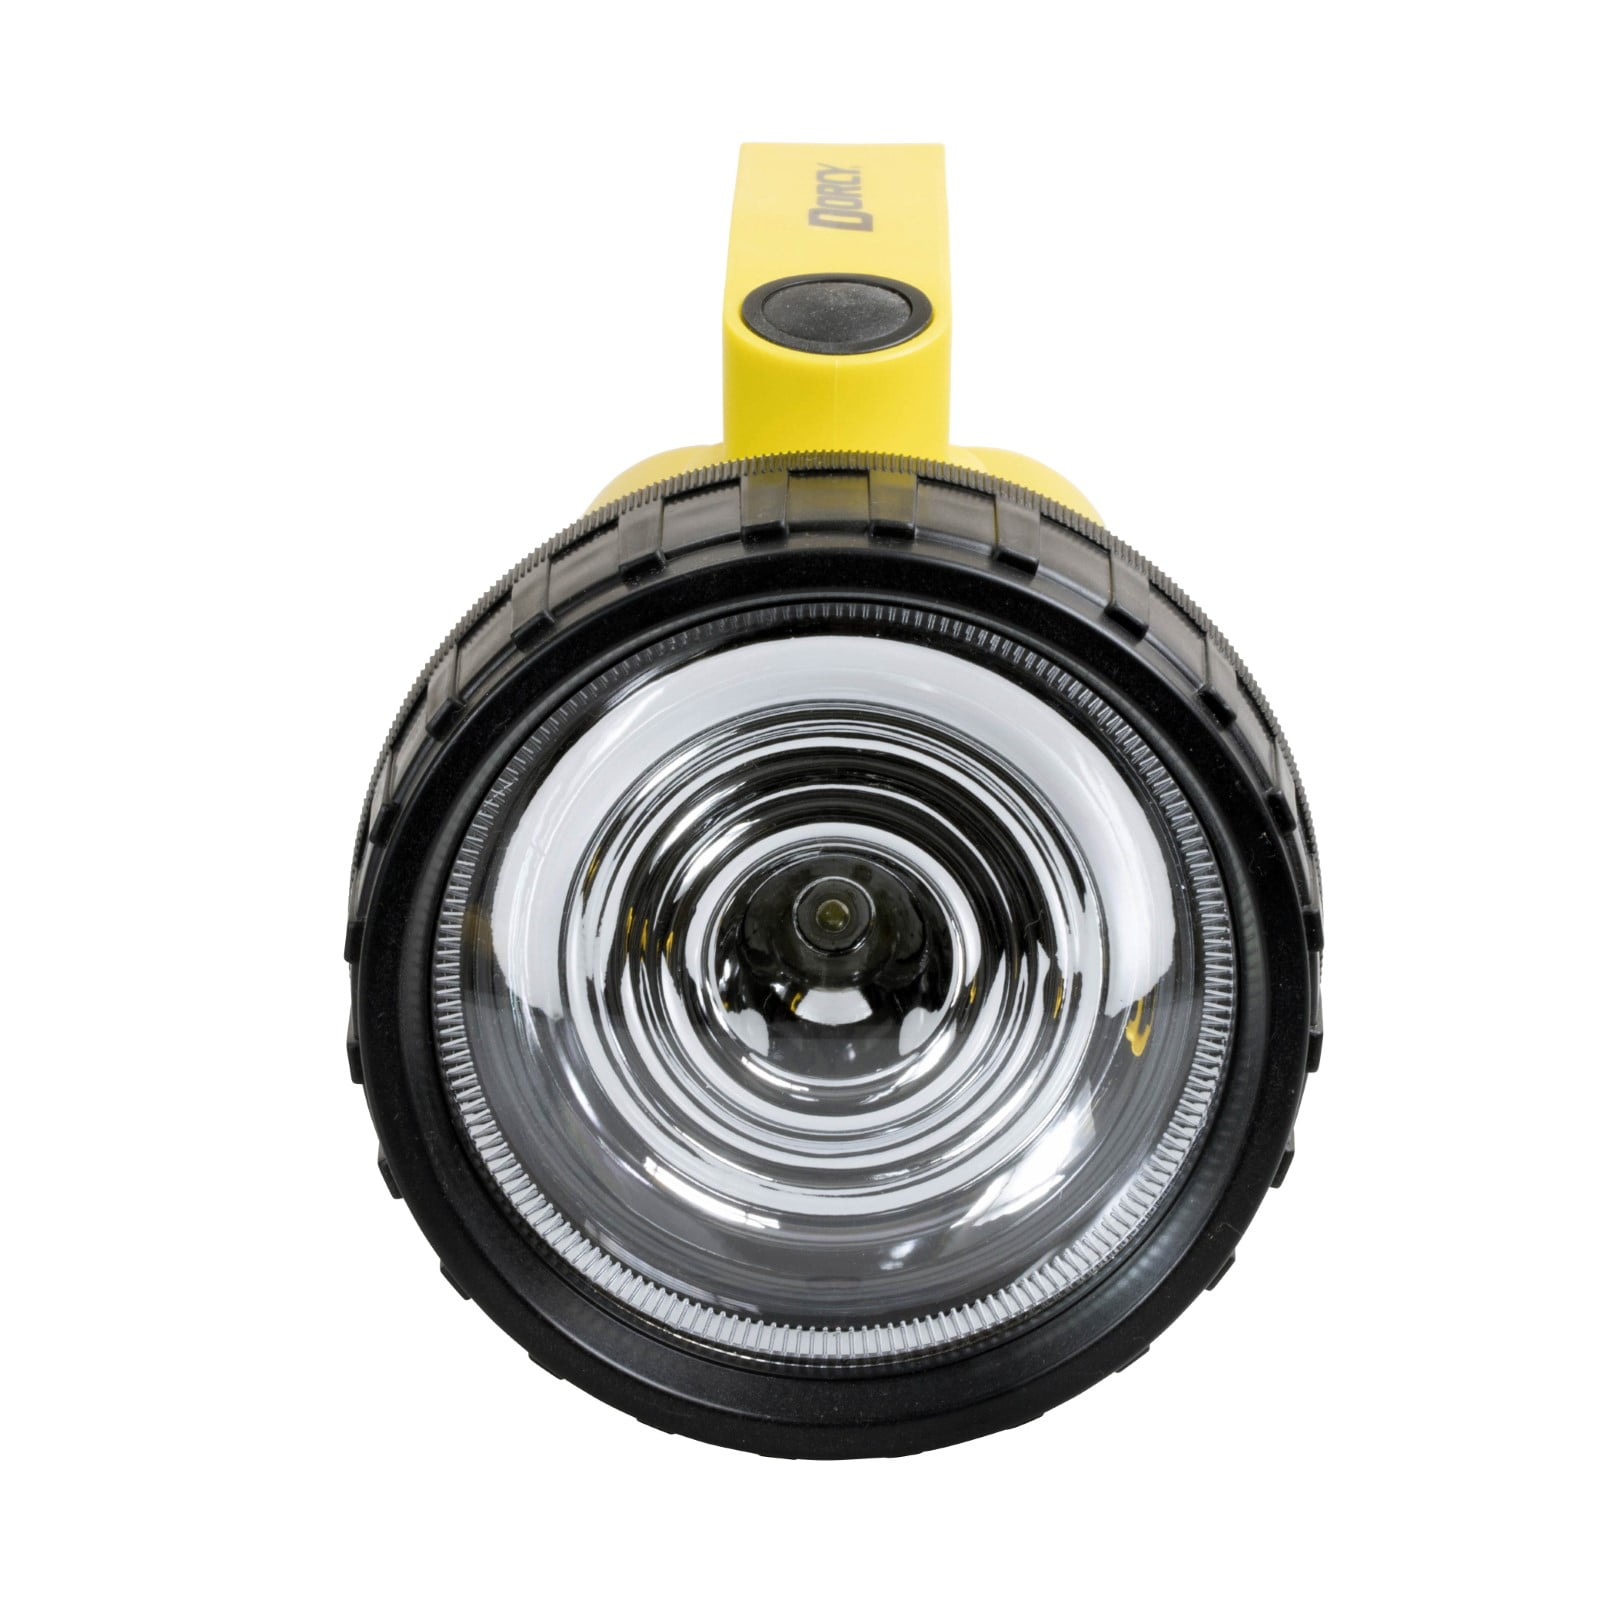 Dorcy 41-2081 6V Floating LED Lantern